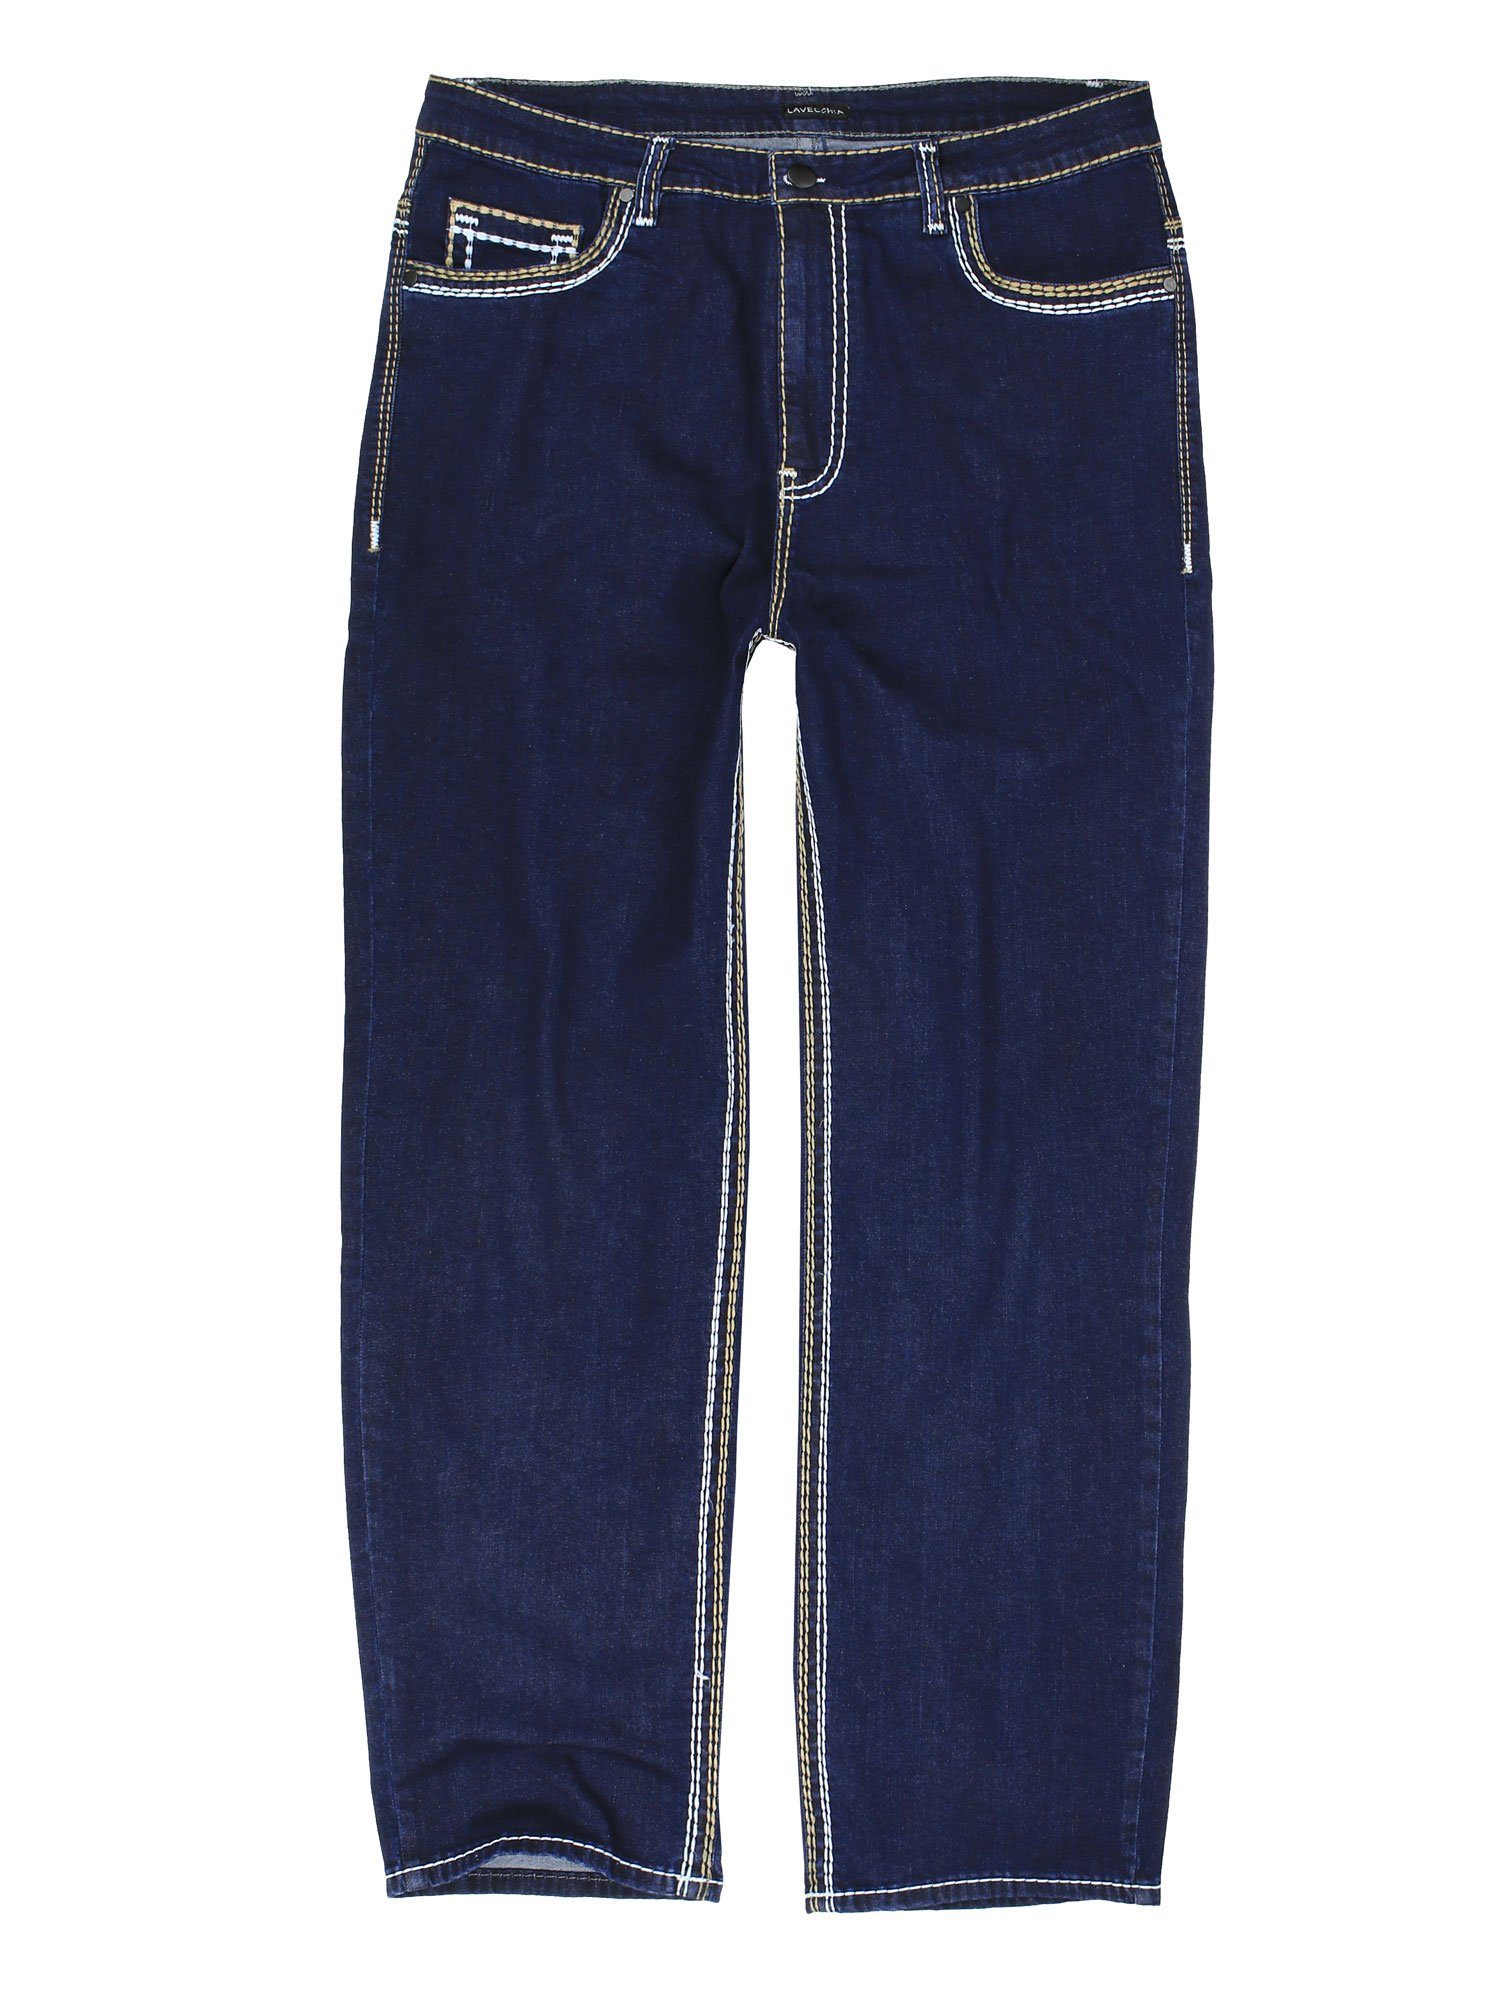 Stretch & Elasthan Comfort-fit-Jeans Naht Jeanshose dicker Lavecchia Übergrößen LV-503 Herren dunkelblau mit